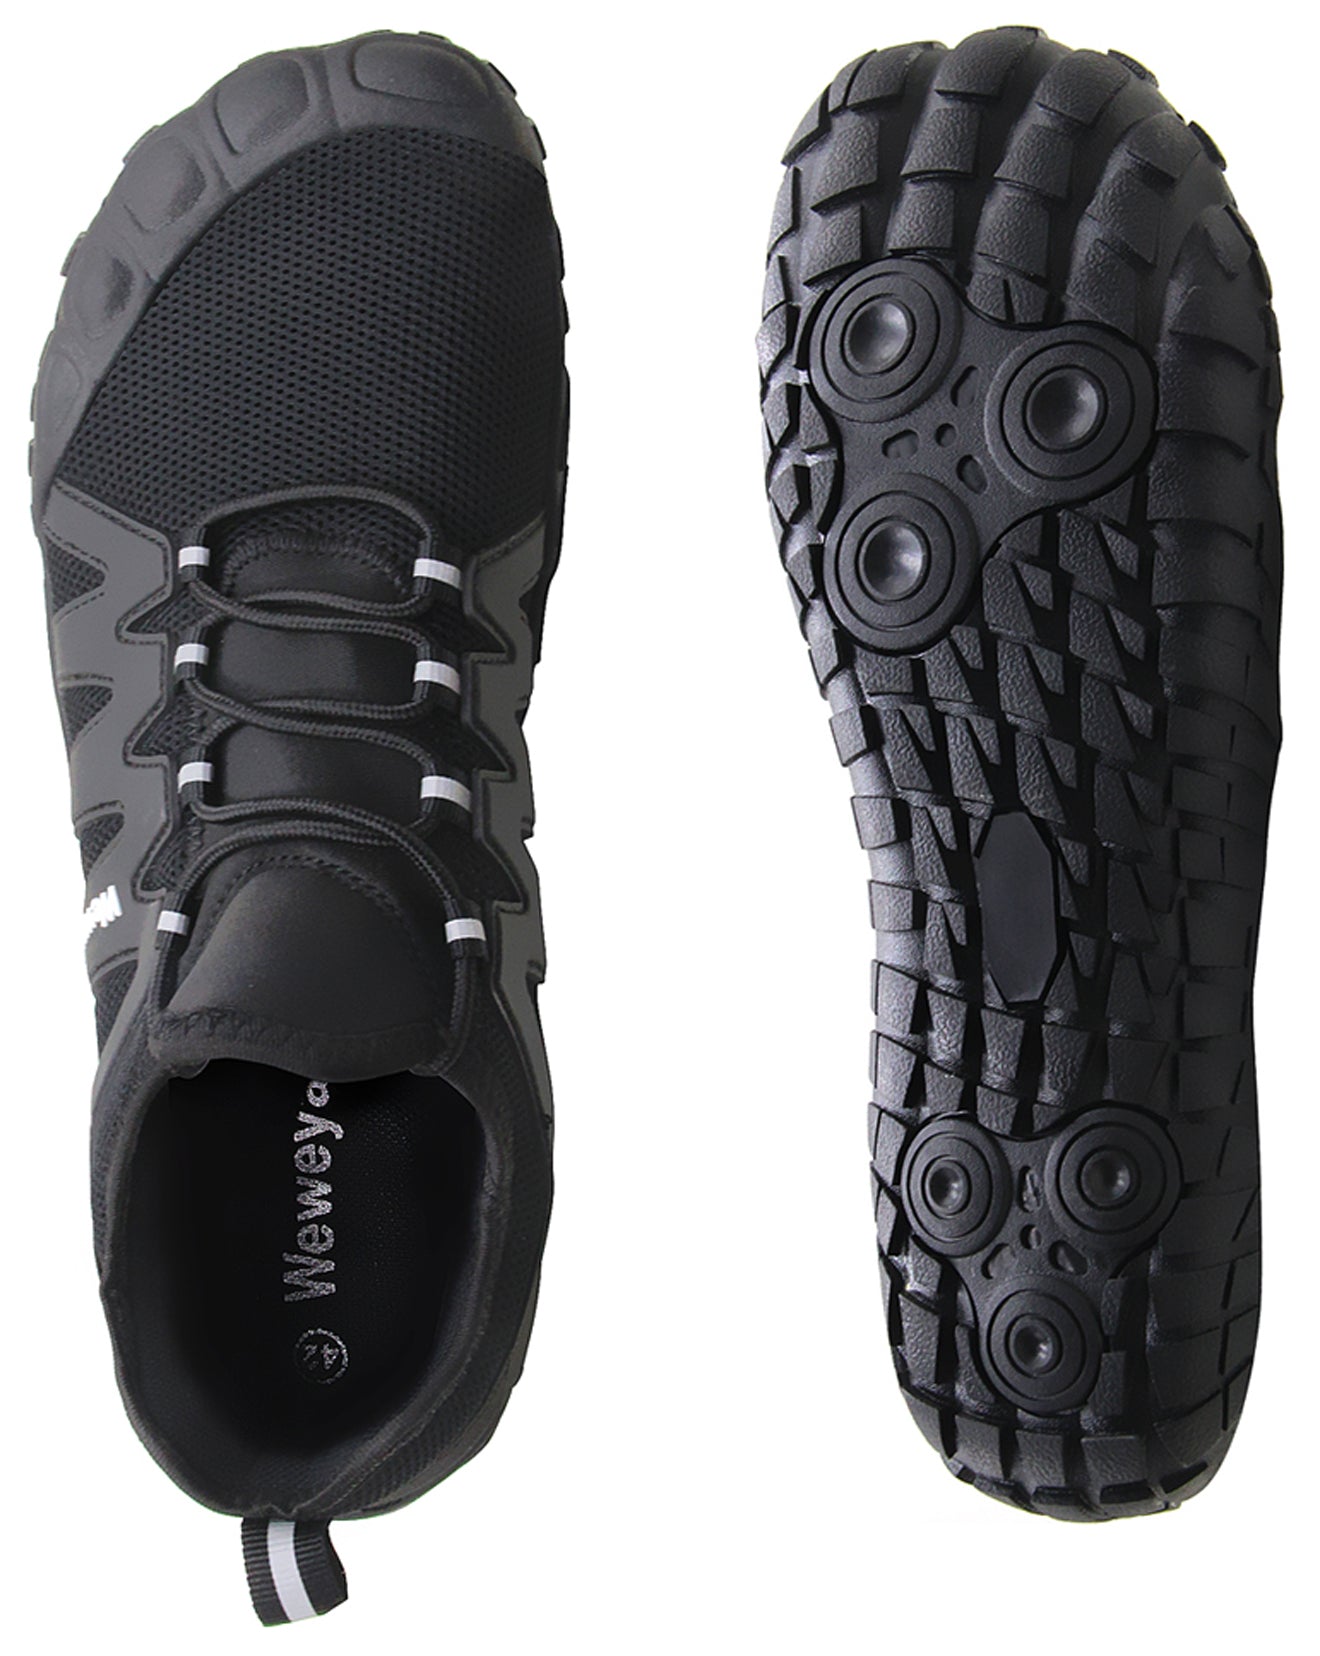 Weweya Men's Barefoot Tongue-less Minimalist Cross Training Shoes